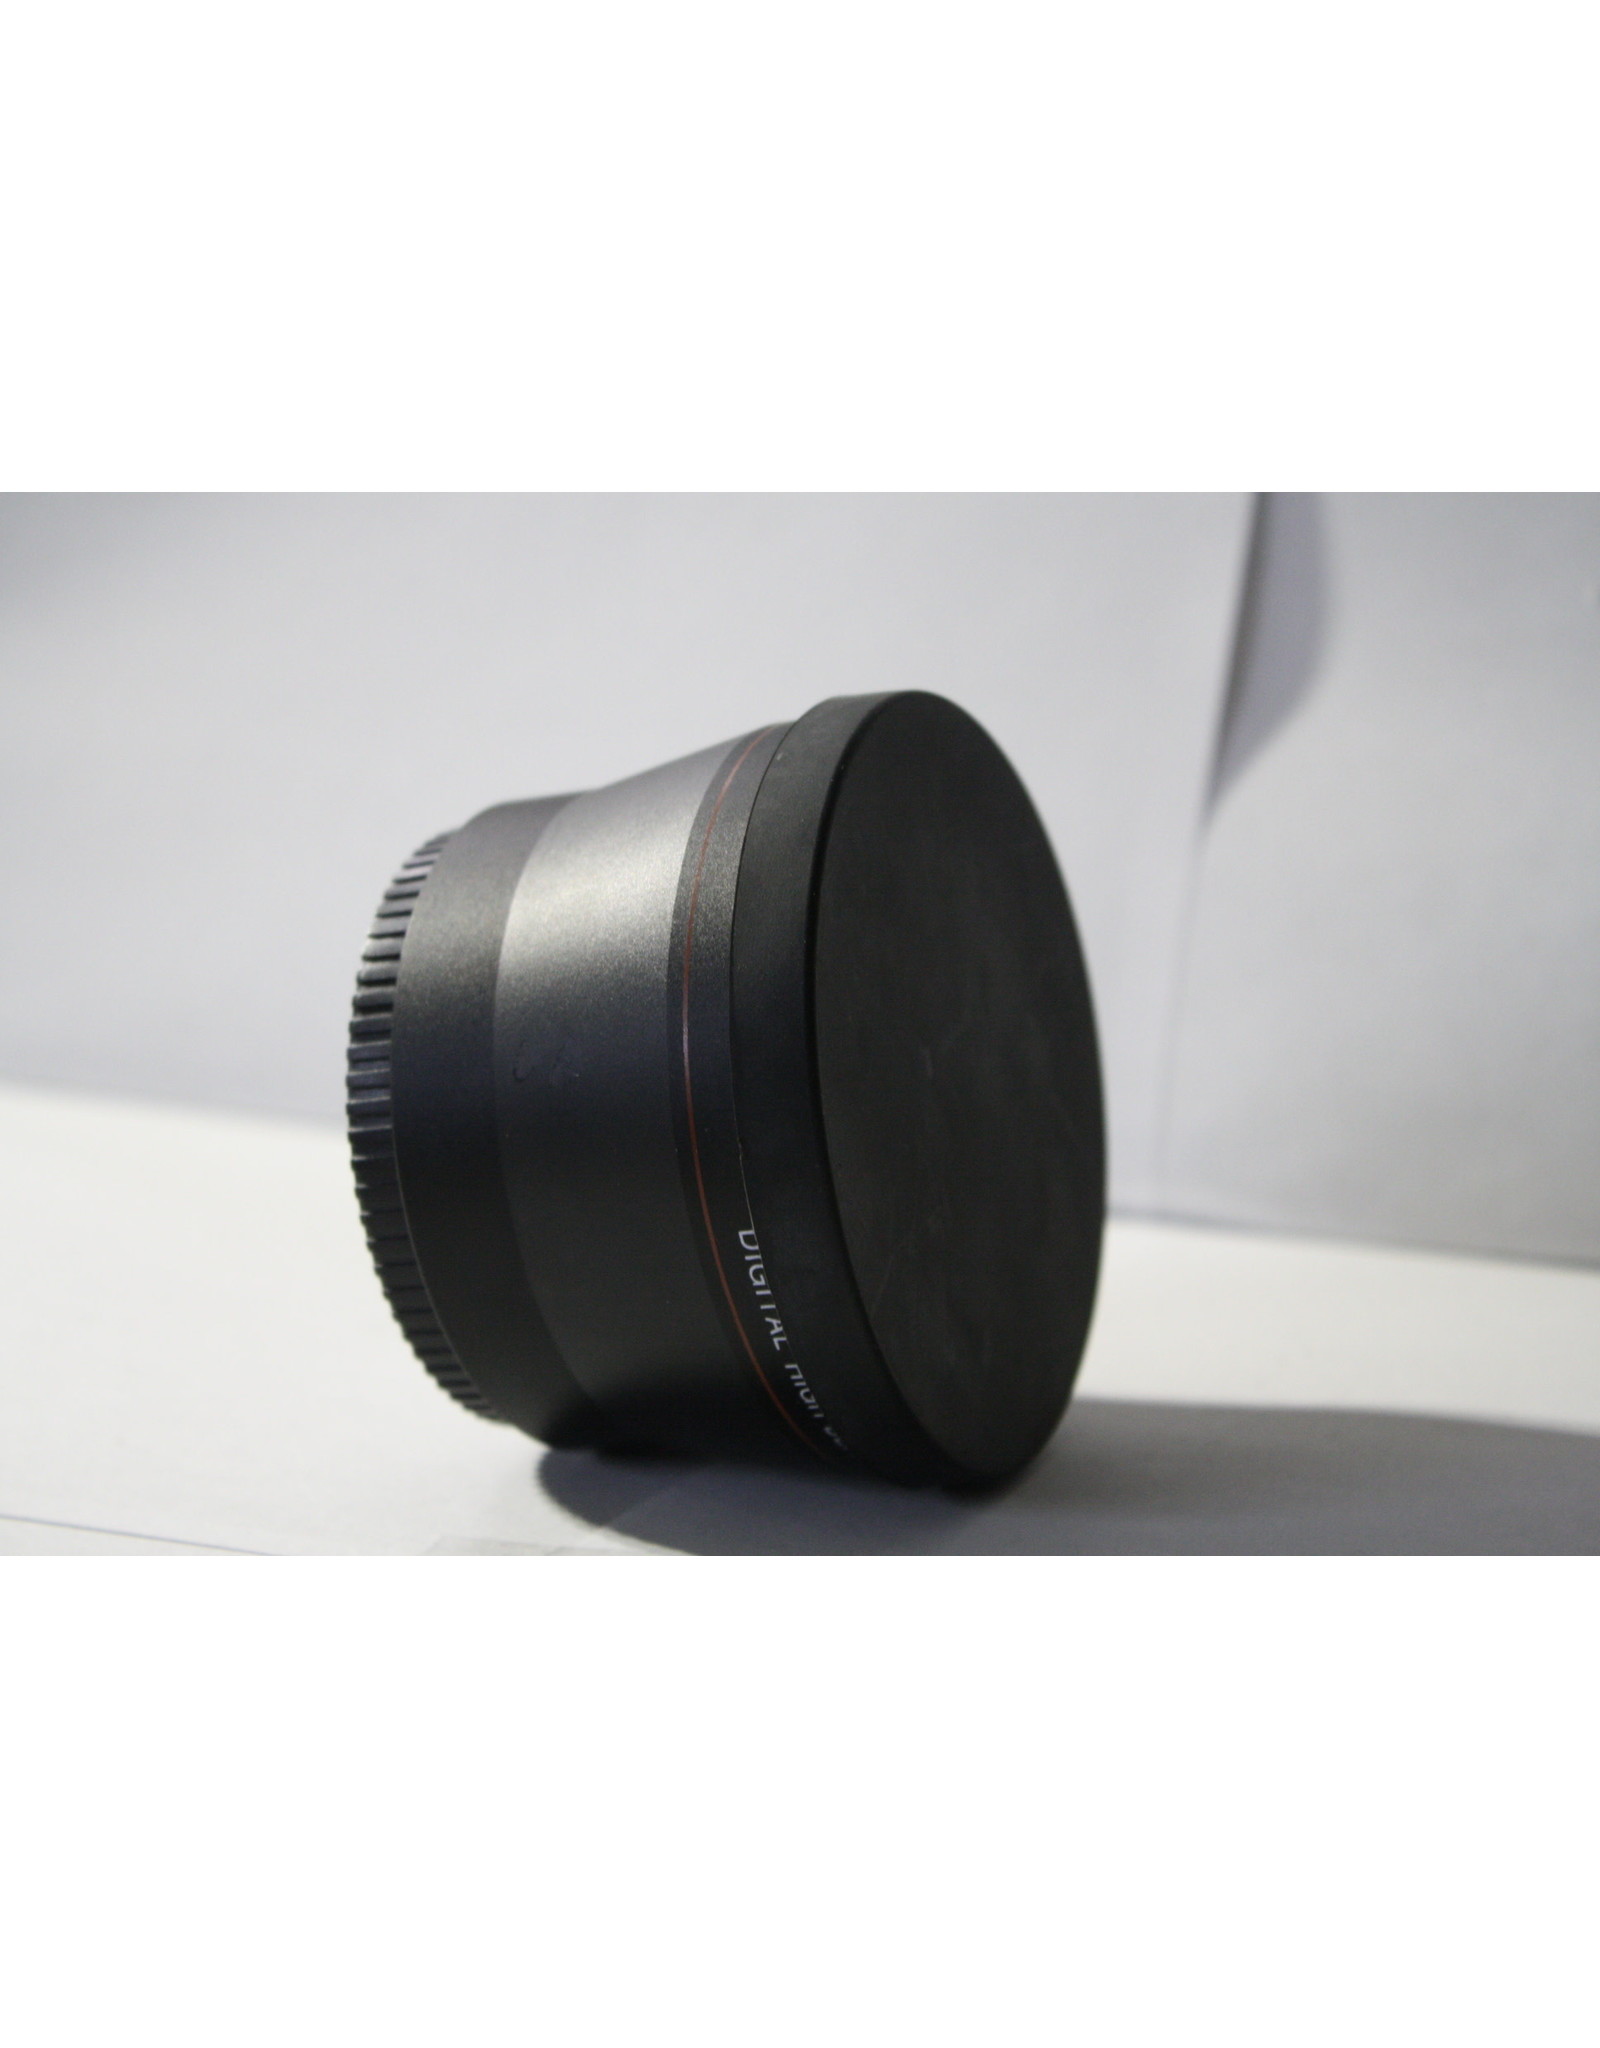 Digital High Definition 2.2X Telephoto Lens (72mm Mount)